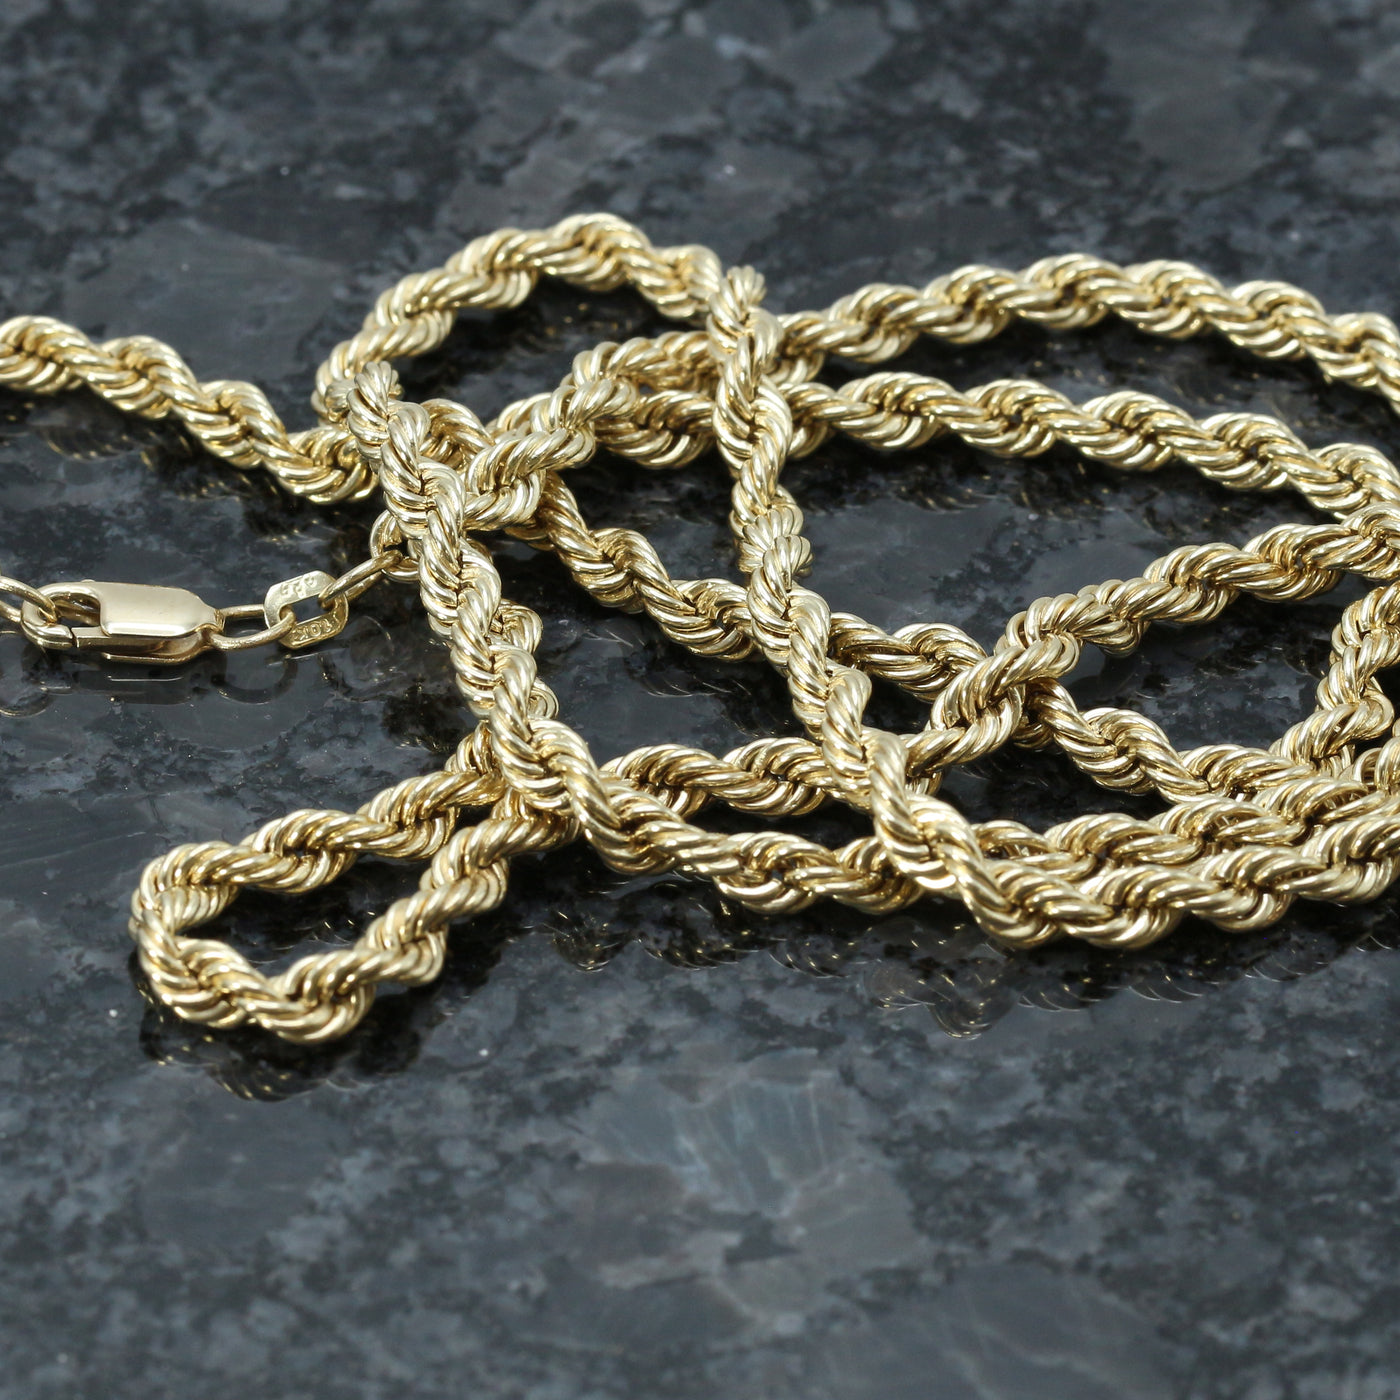 Yellow Gold Rope Chain